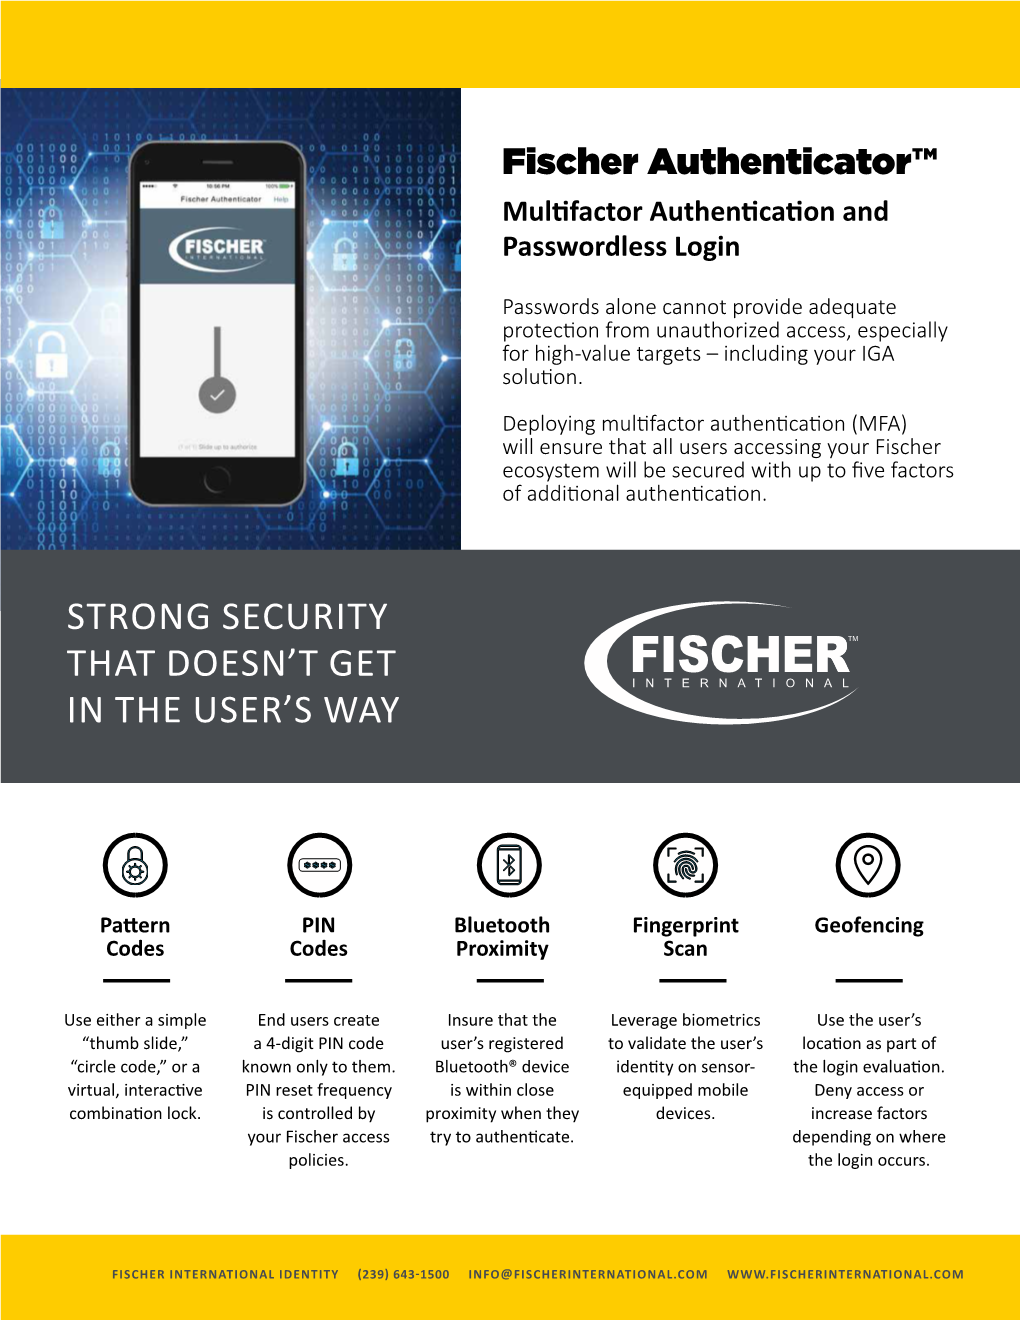 Fischer Authenticator: Multifactor Authentication